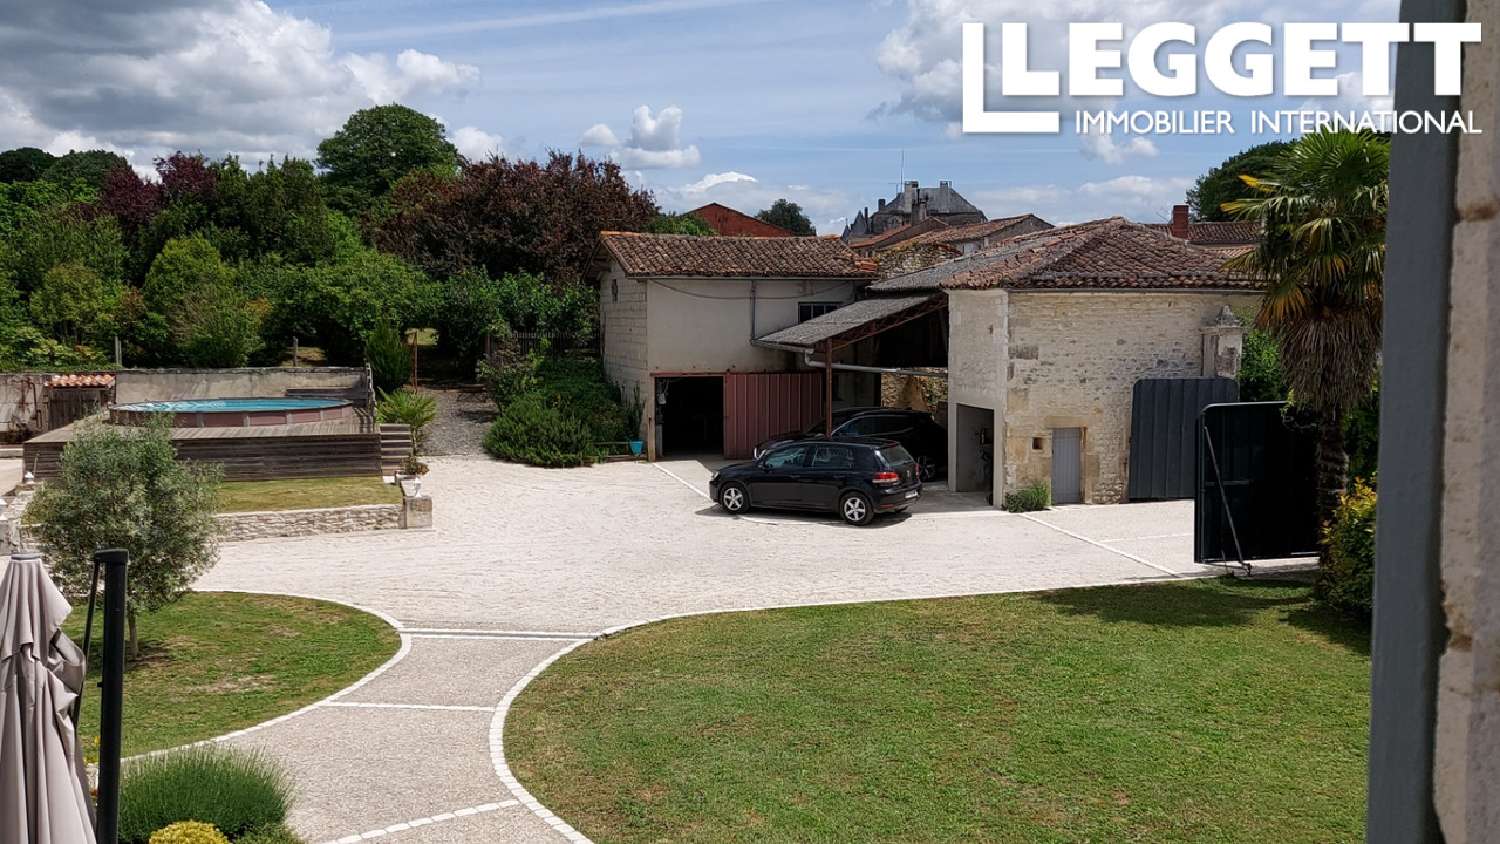  à vendre maison bourgeoise Bourg-Charente Charente 2